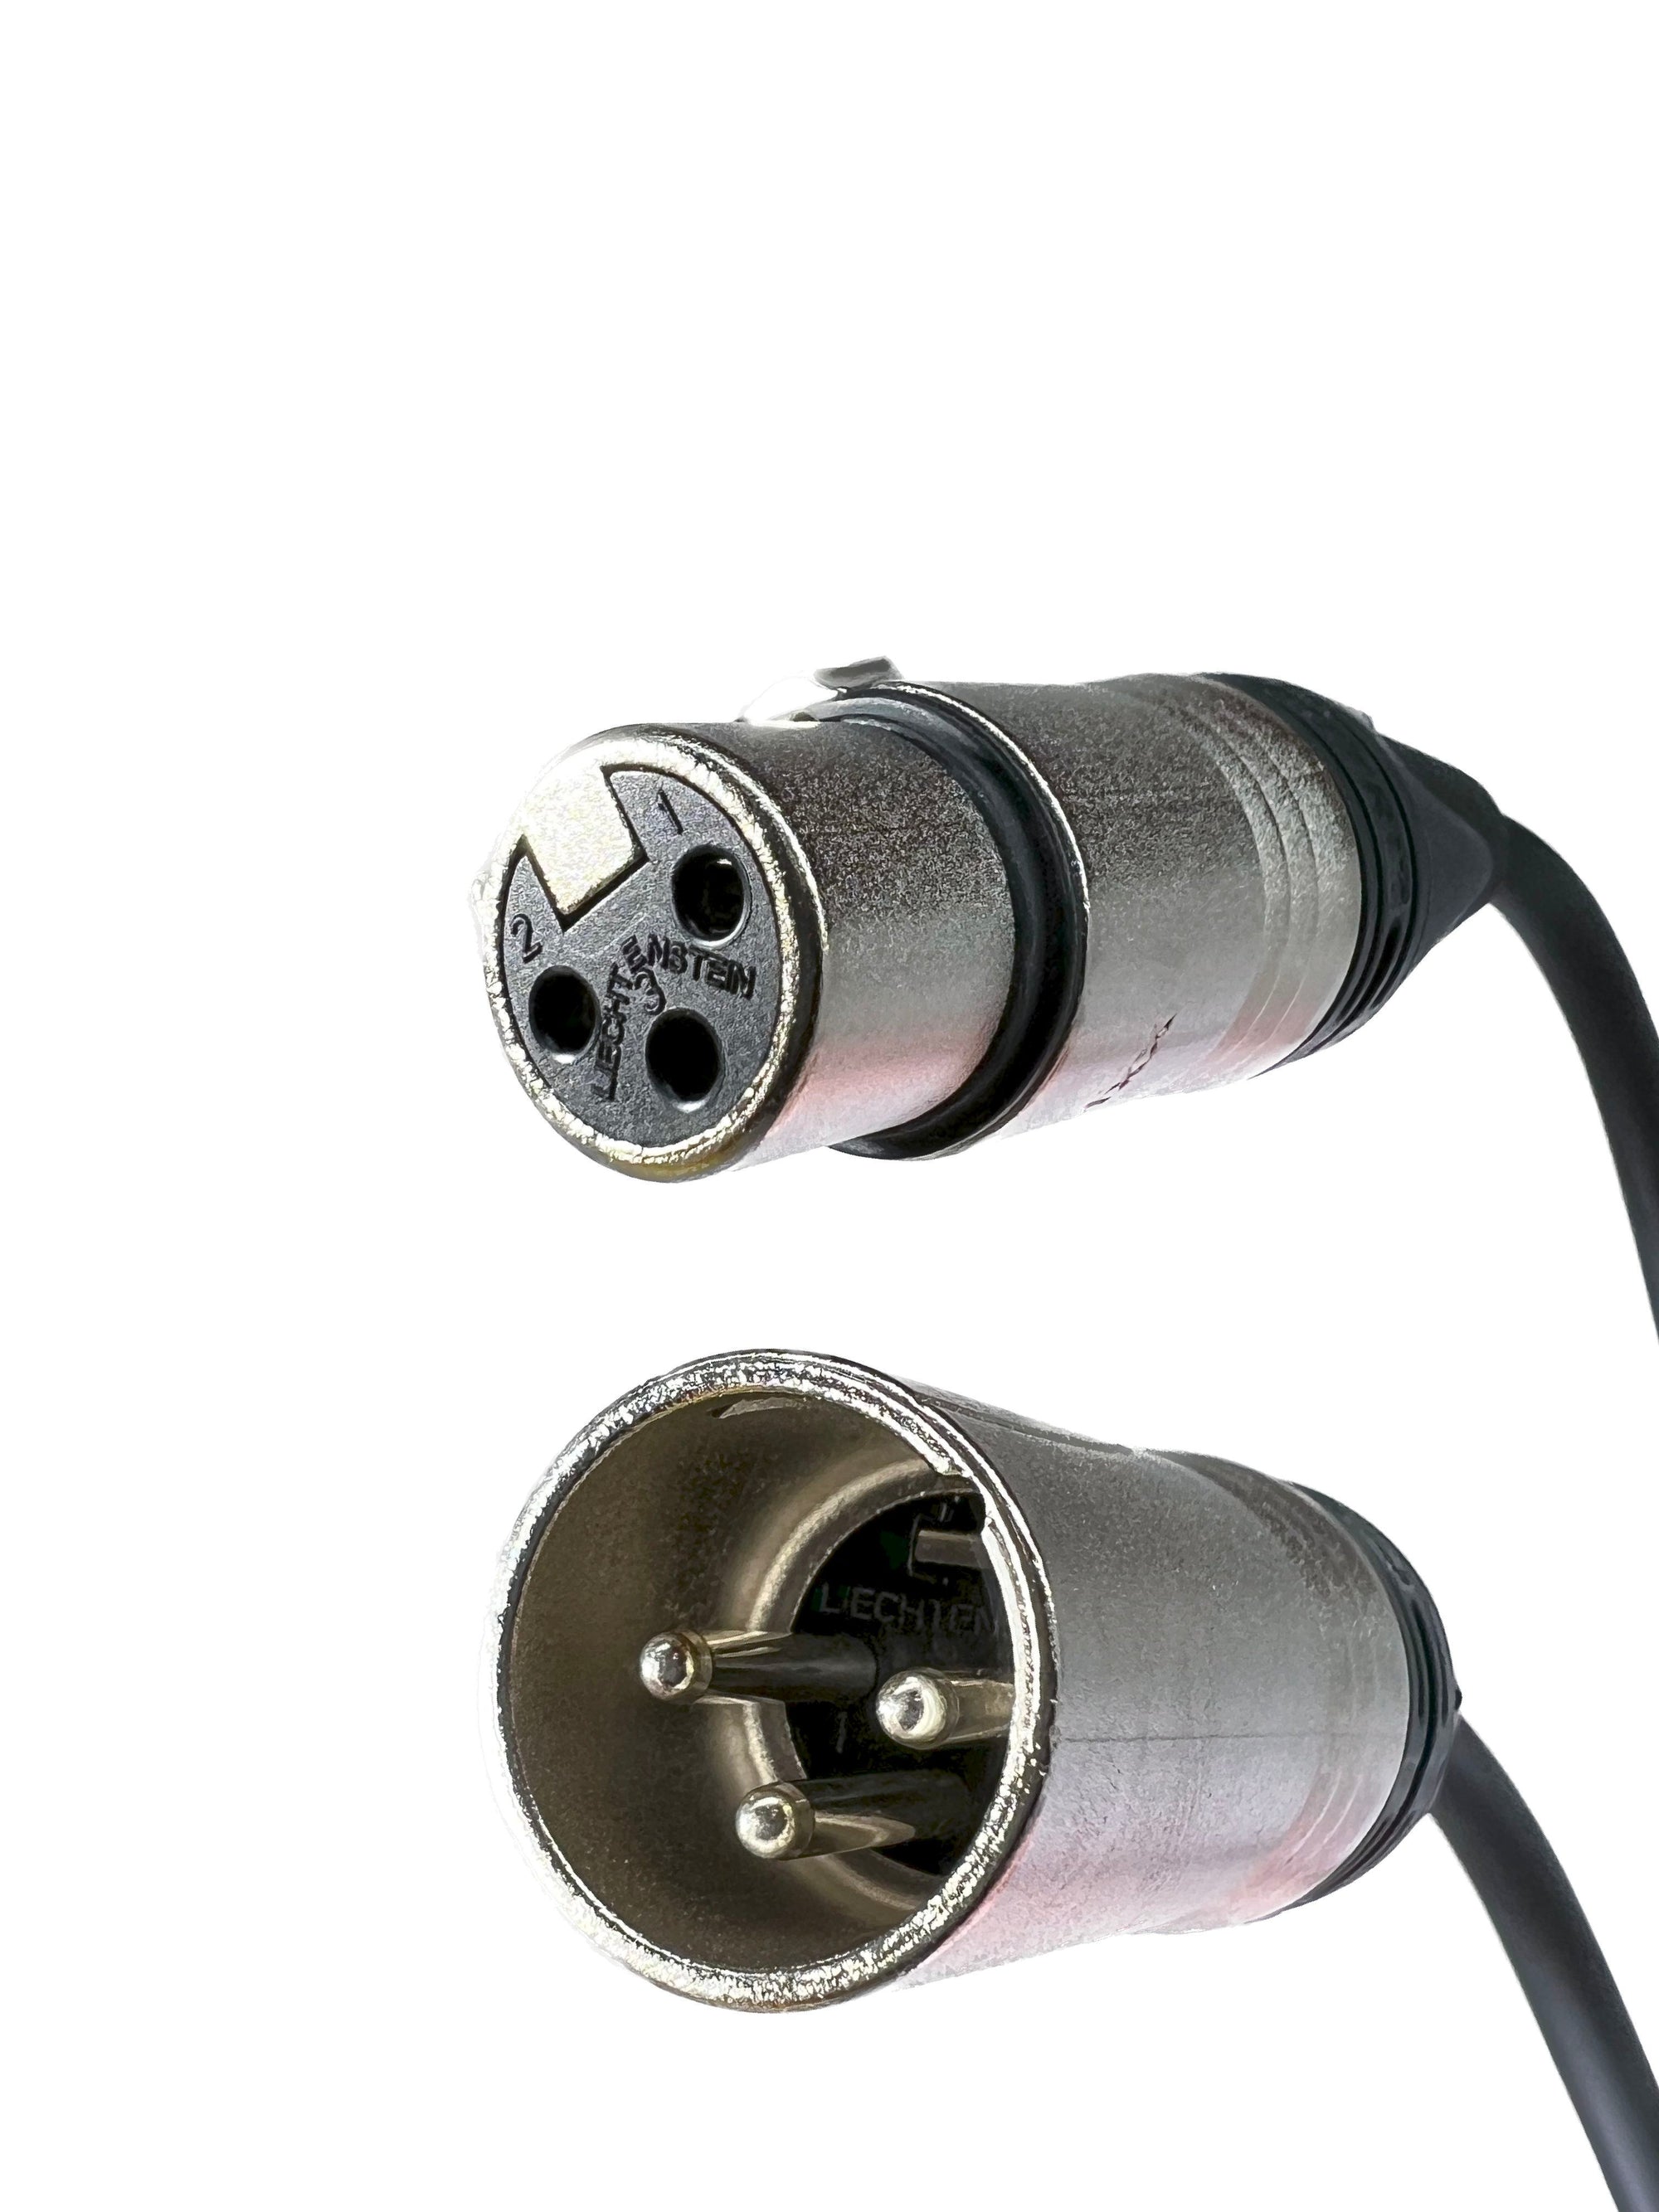 RS PRO Female 3 Pin XLR to Male 3 Pin XLR Cable, Black, 10m